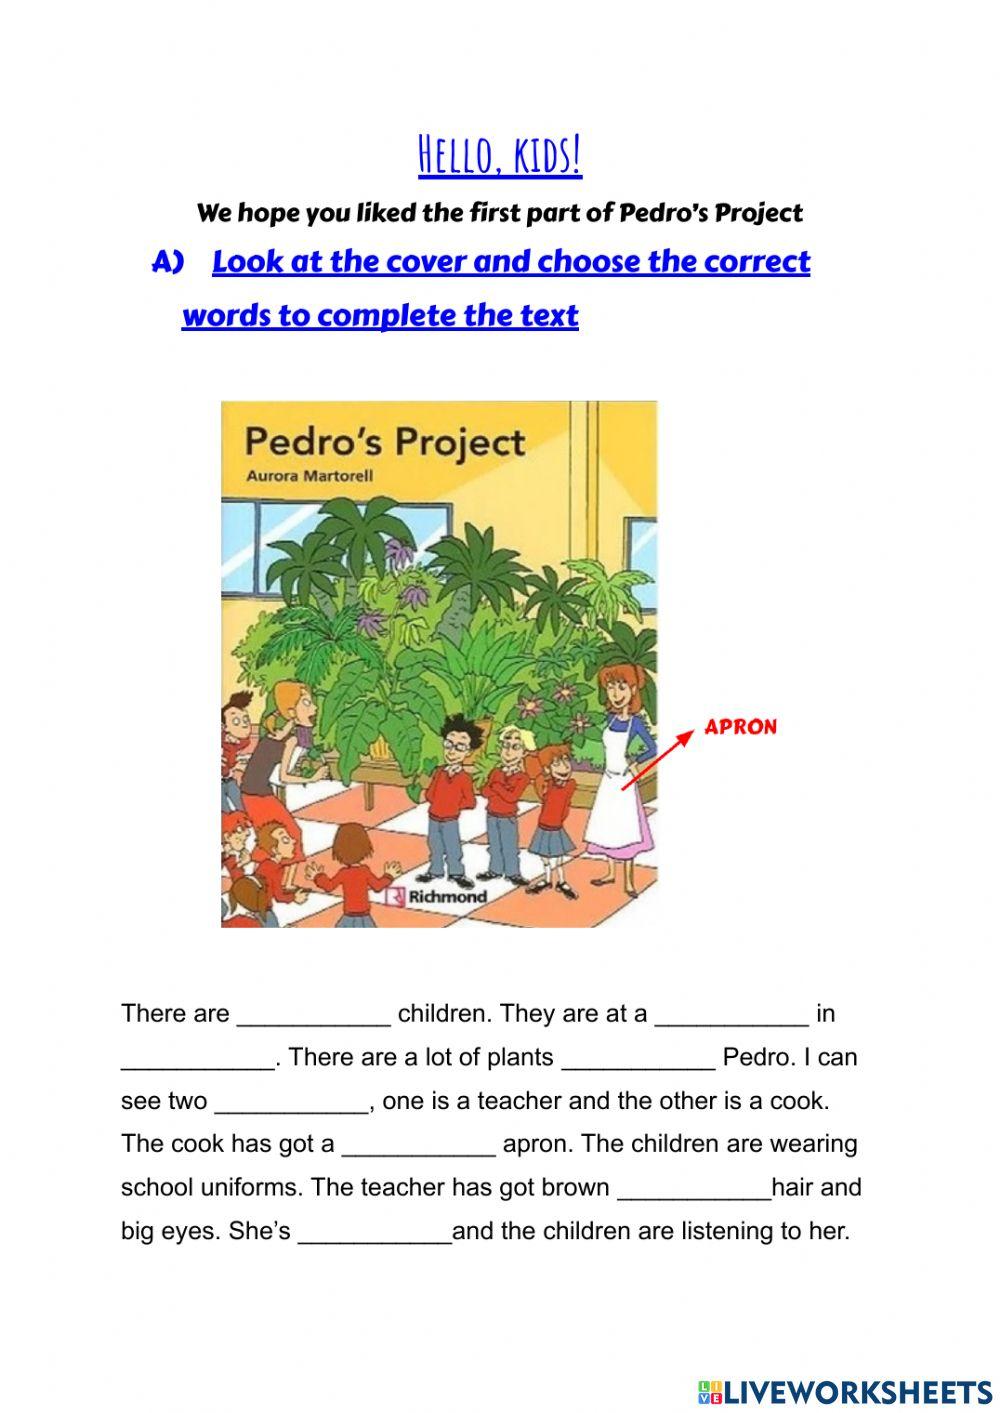 Pedro's Project